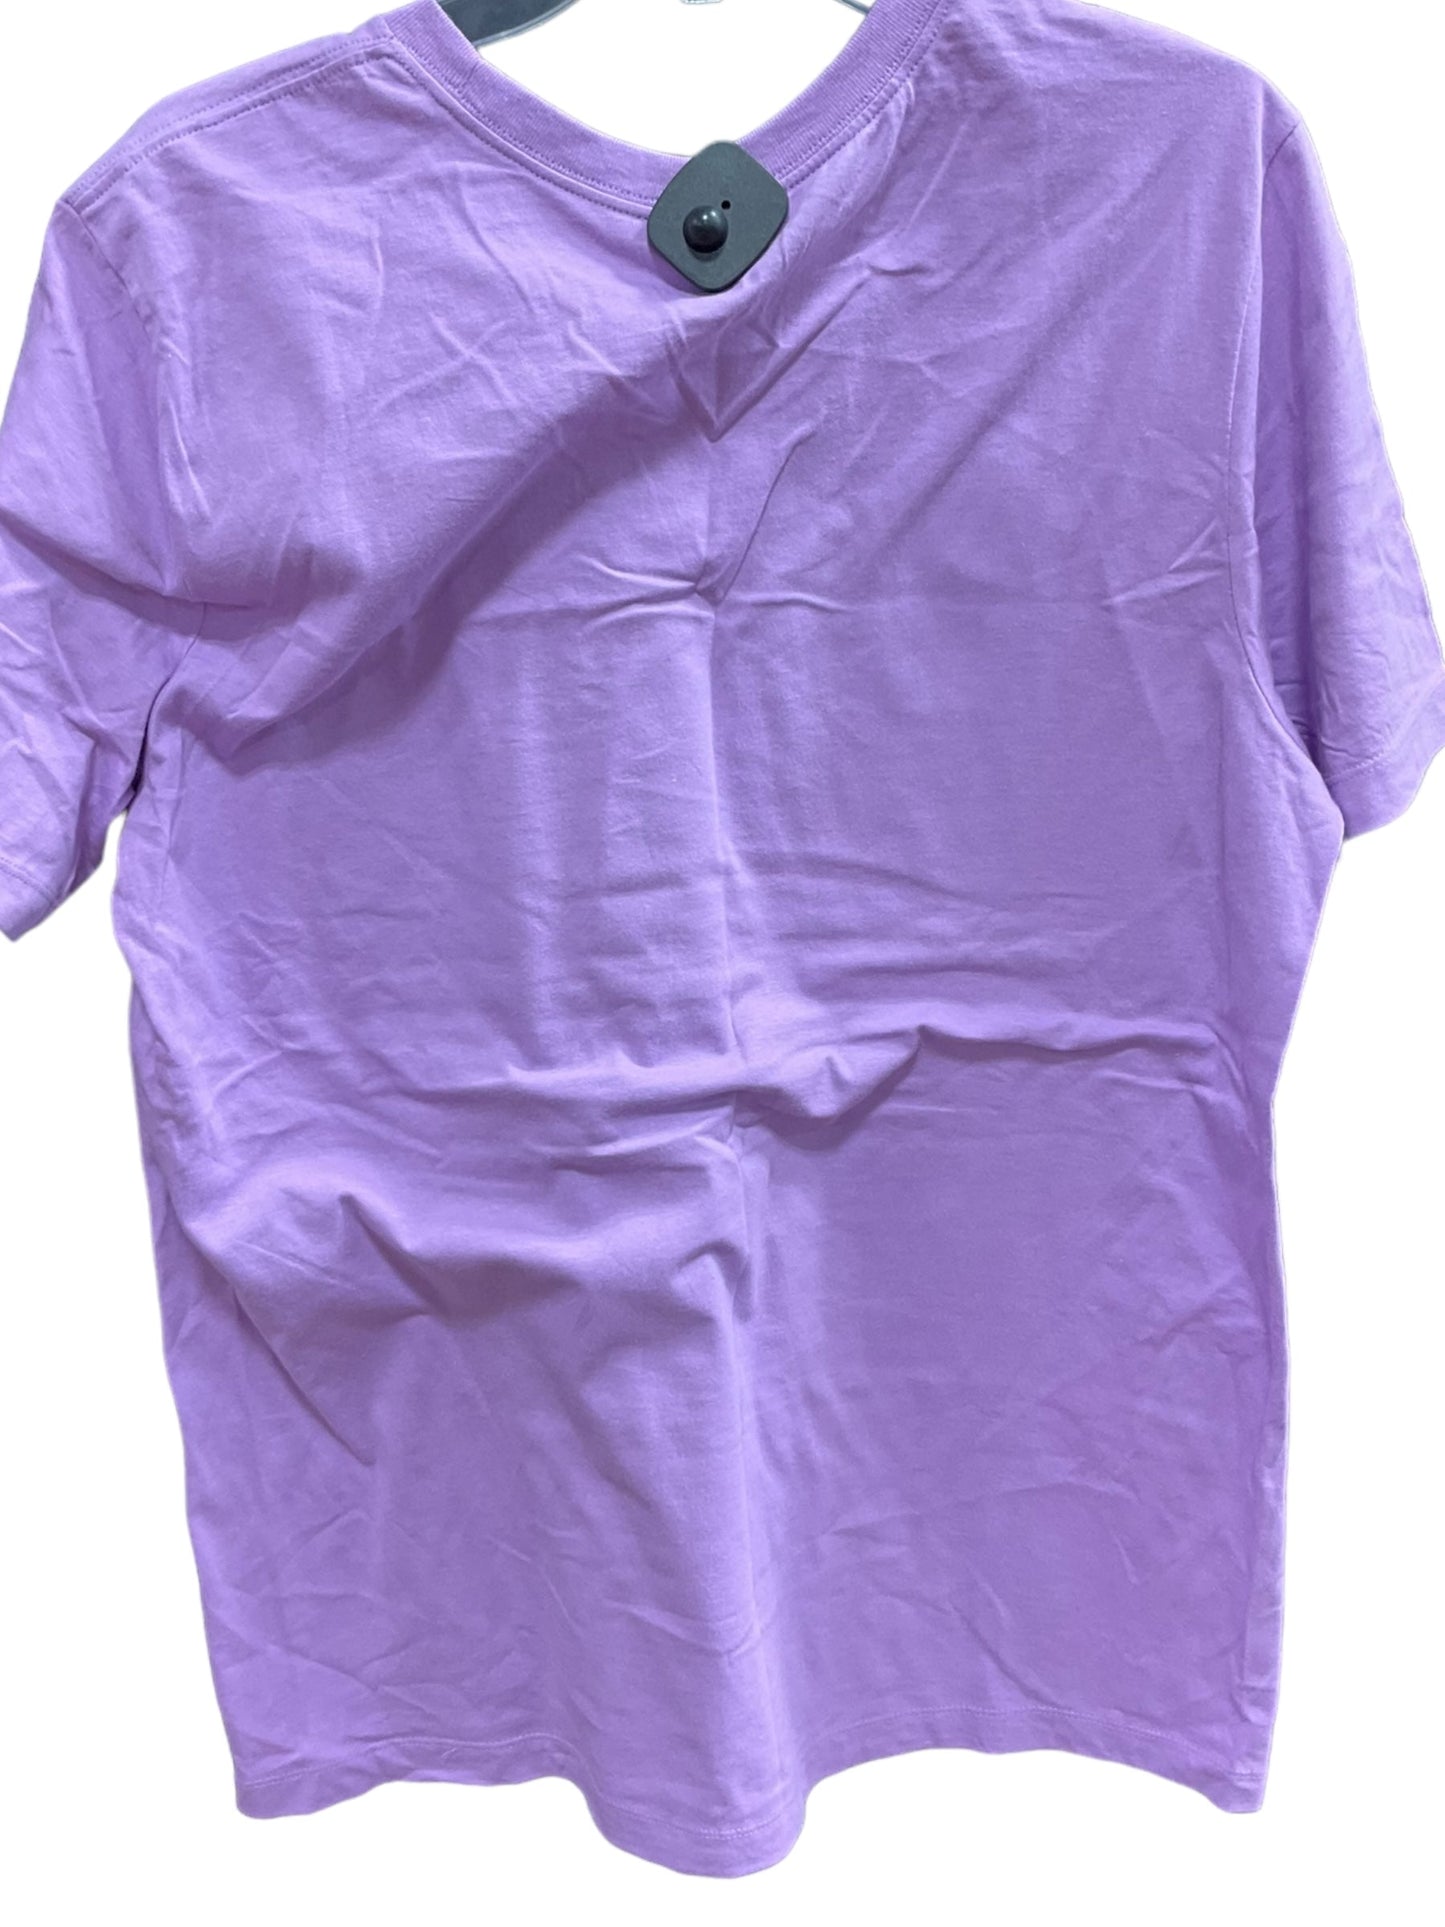 Purple Athletic Top Short Sleeve Nike Apparel, Size L